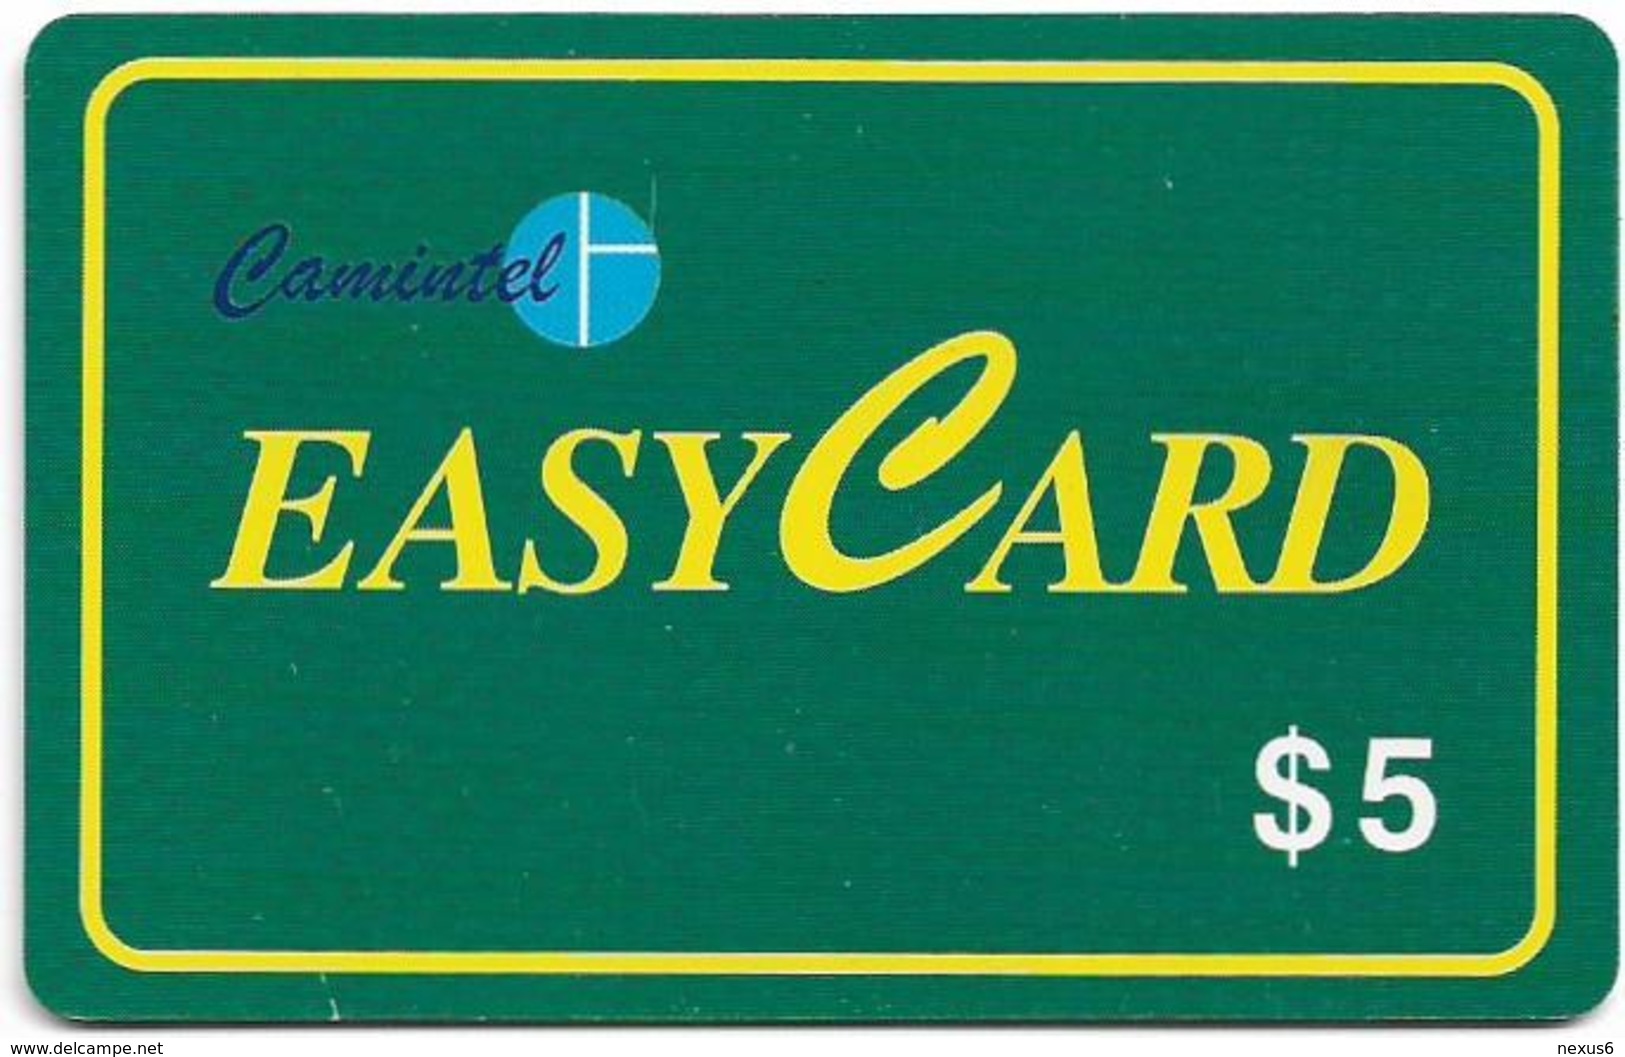 Cambodia - Camitel - Easycard Green 5$, (No Instructions Below Arrow), Used - Kambodscha